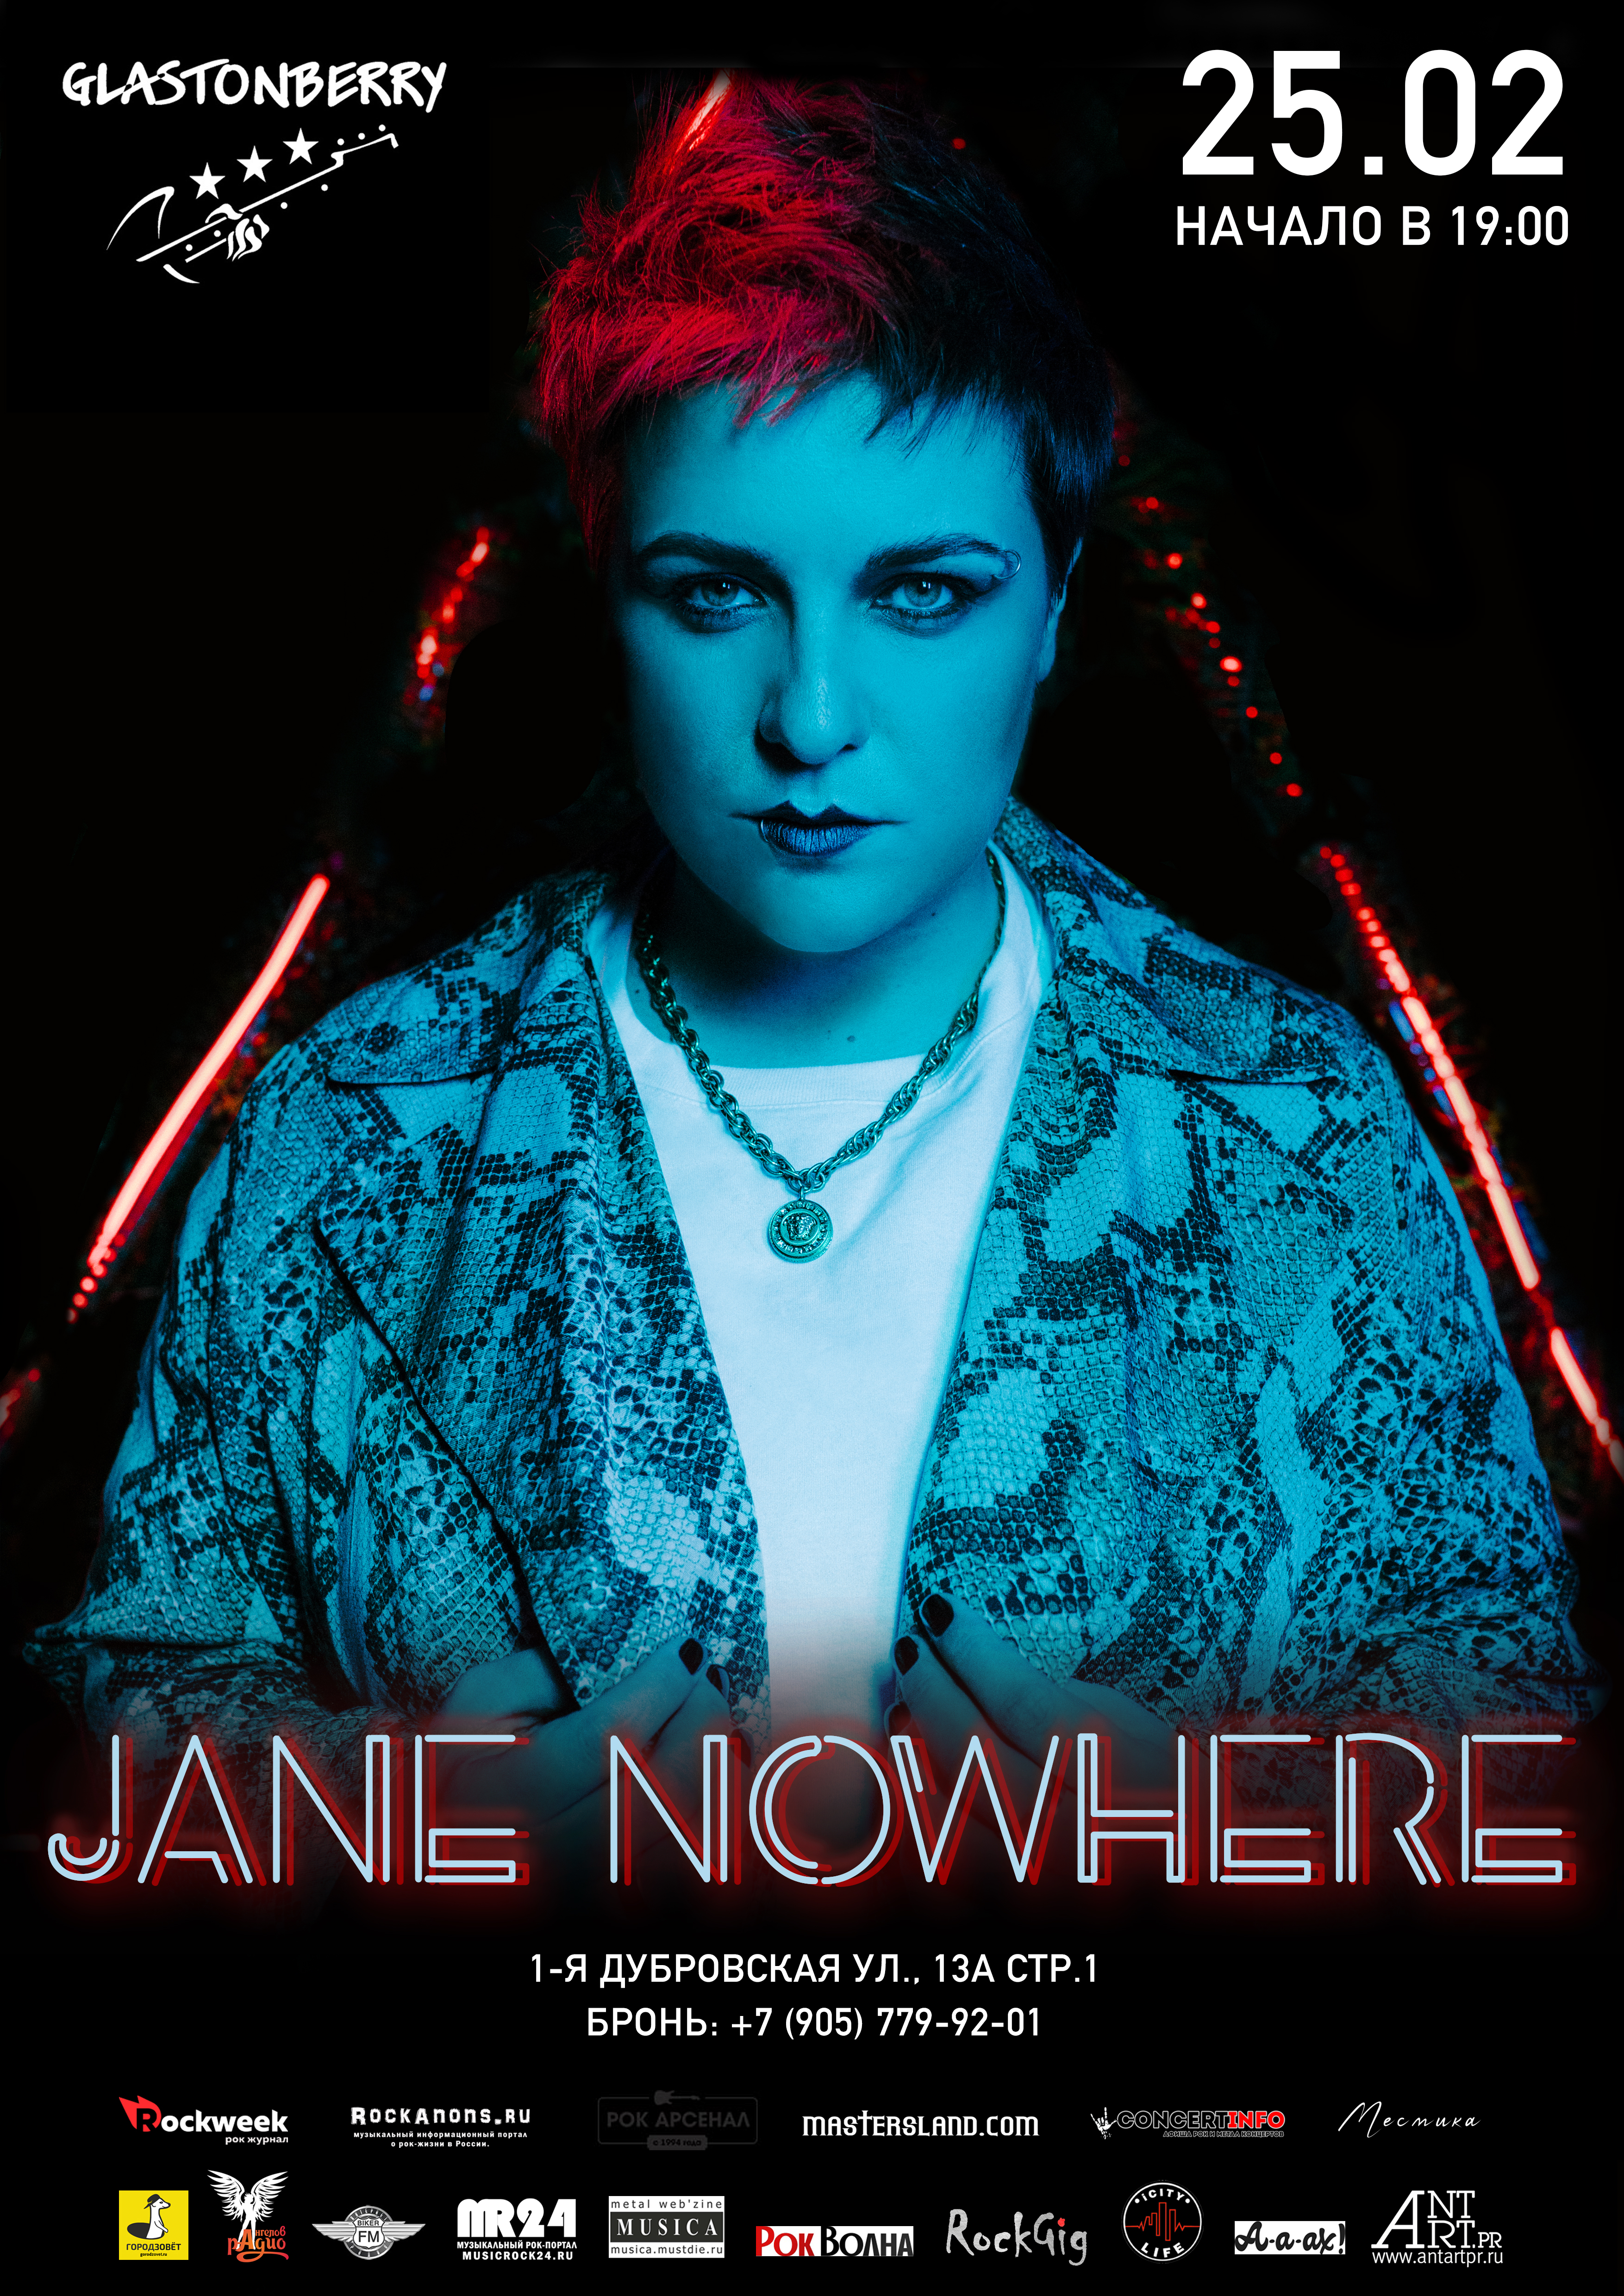 Jane Nowhere 25 февраля 2021, концерт в Glastonberry, Москва